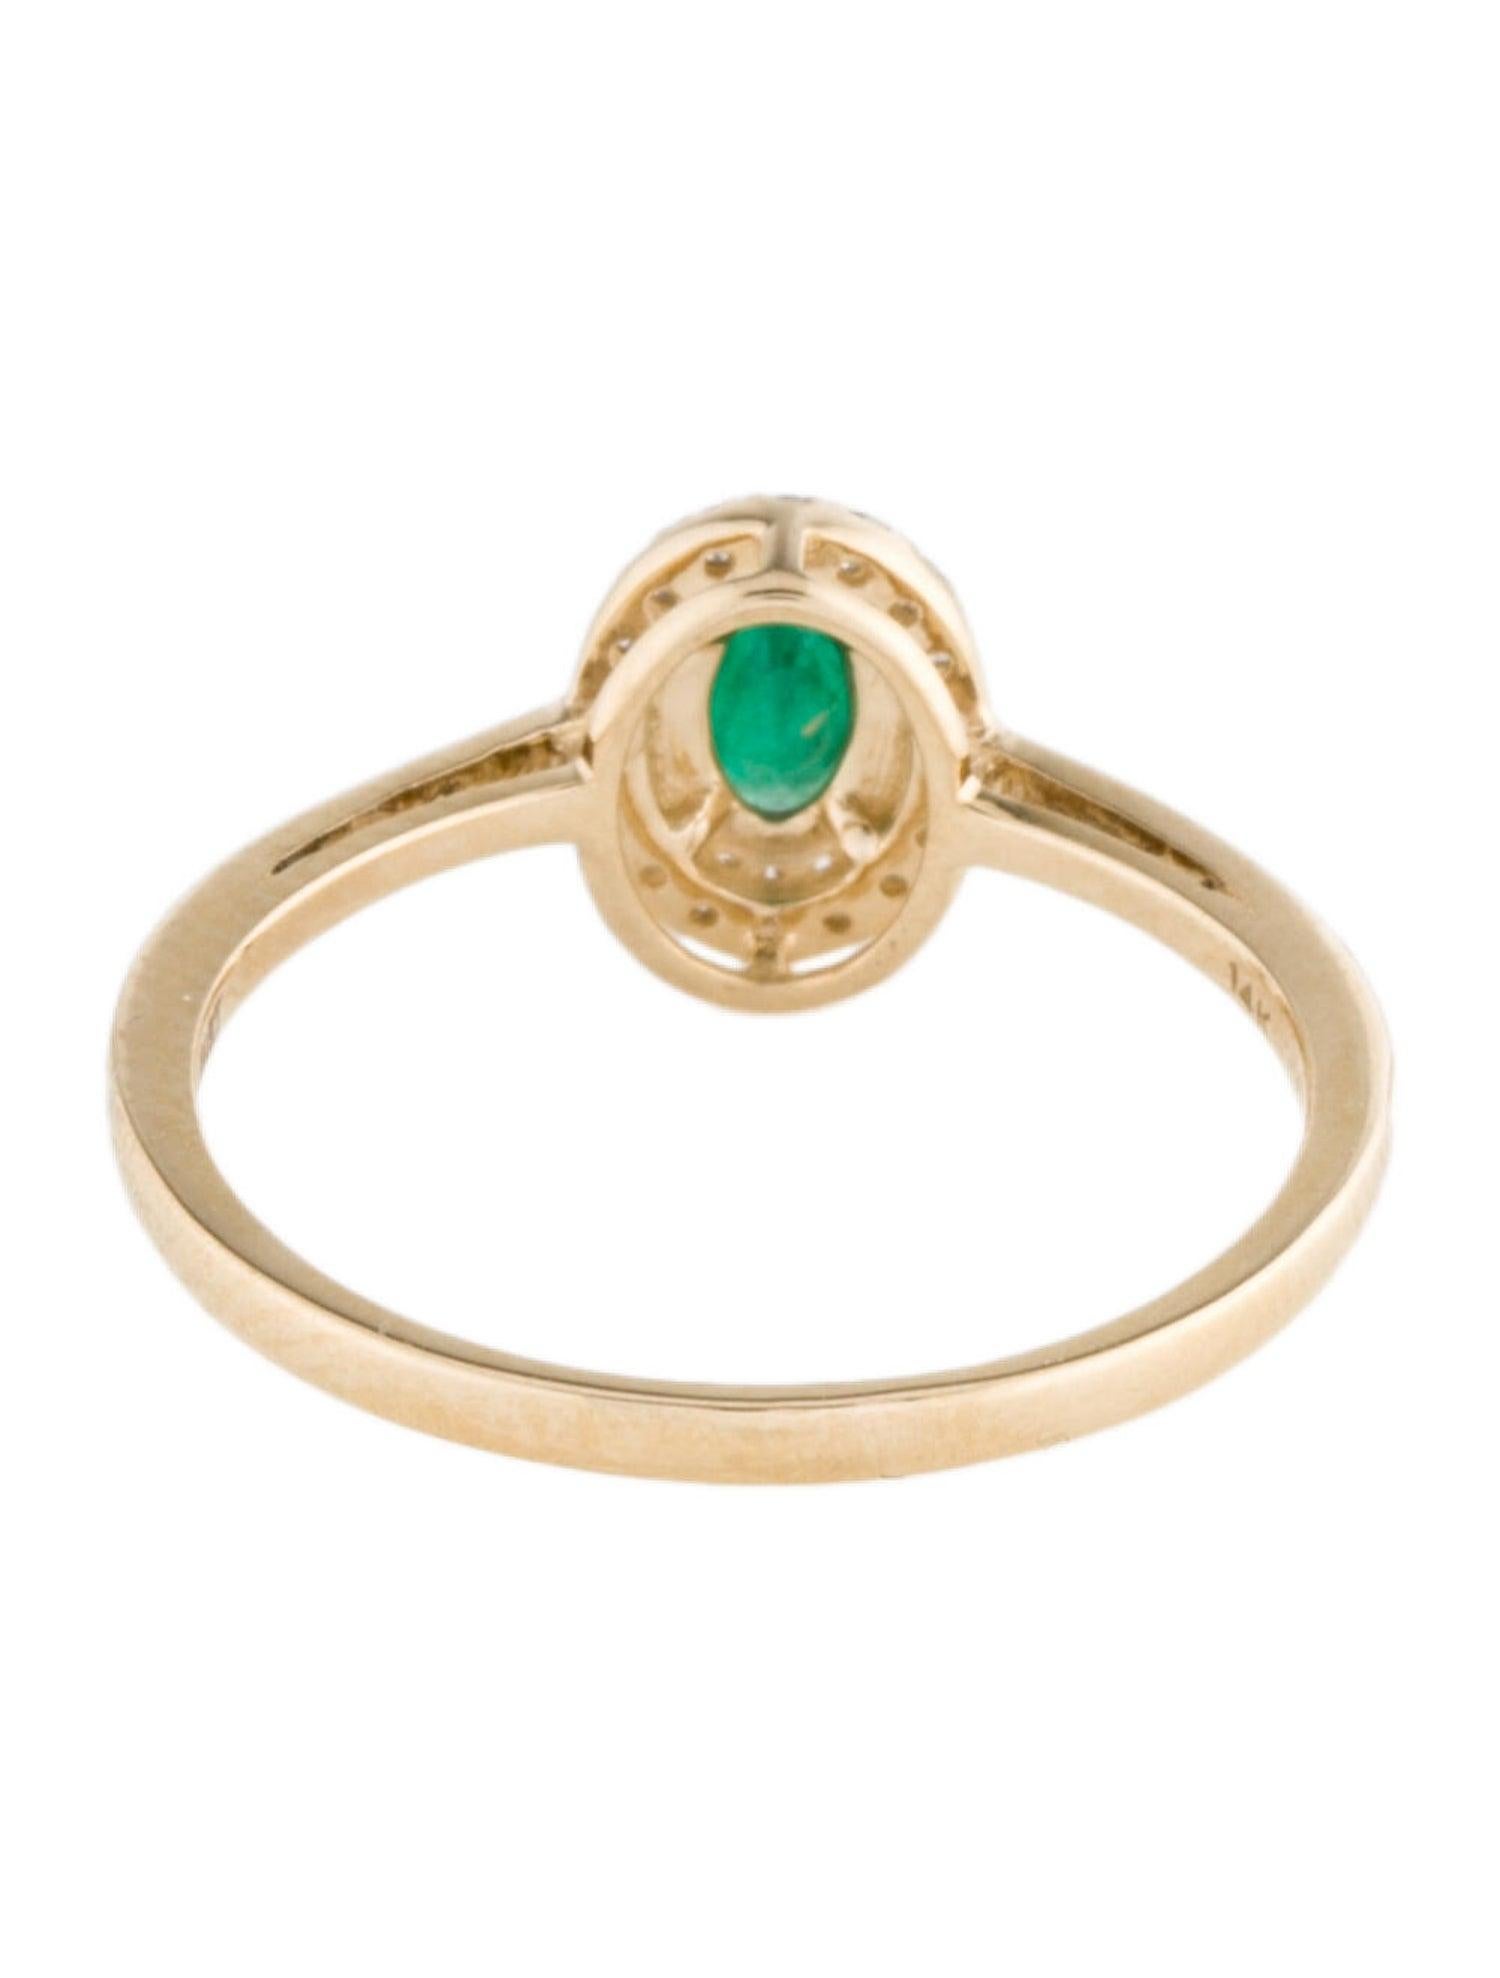 Emerald Cut Stunning 14K Emerald & Diamond Halo Ring, Size 7 - Statement Jewelry Piece For Sale